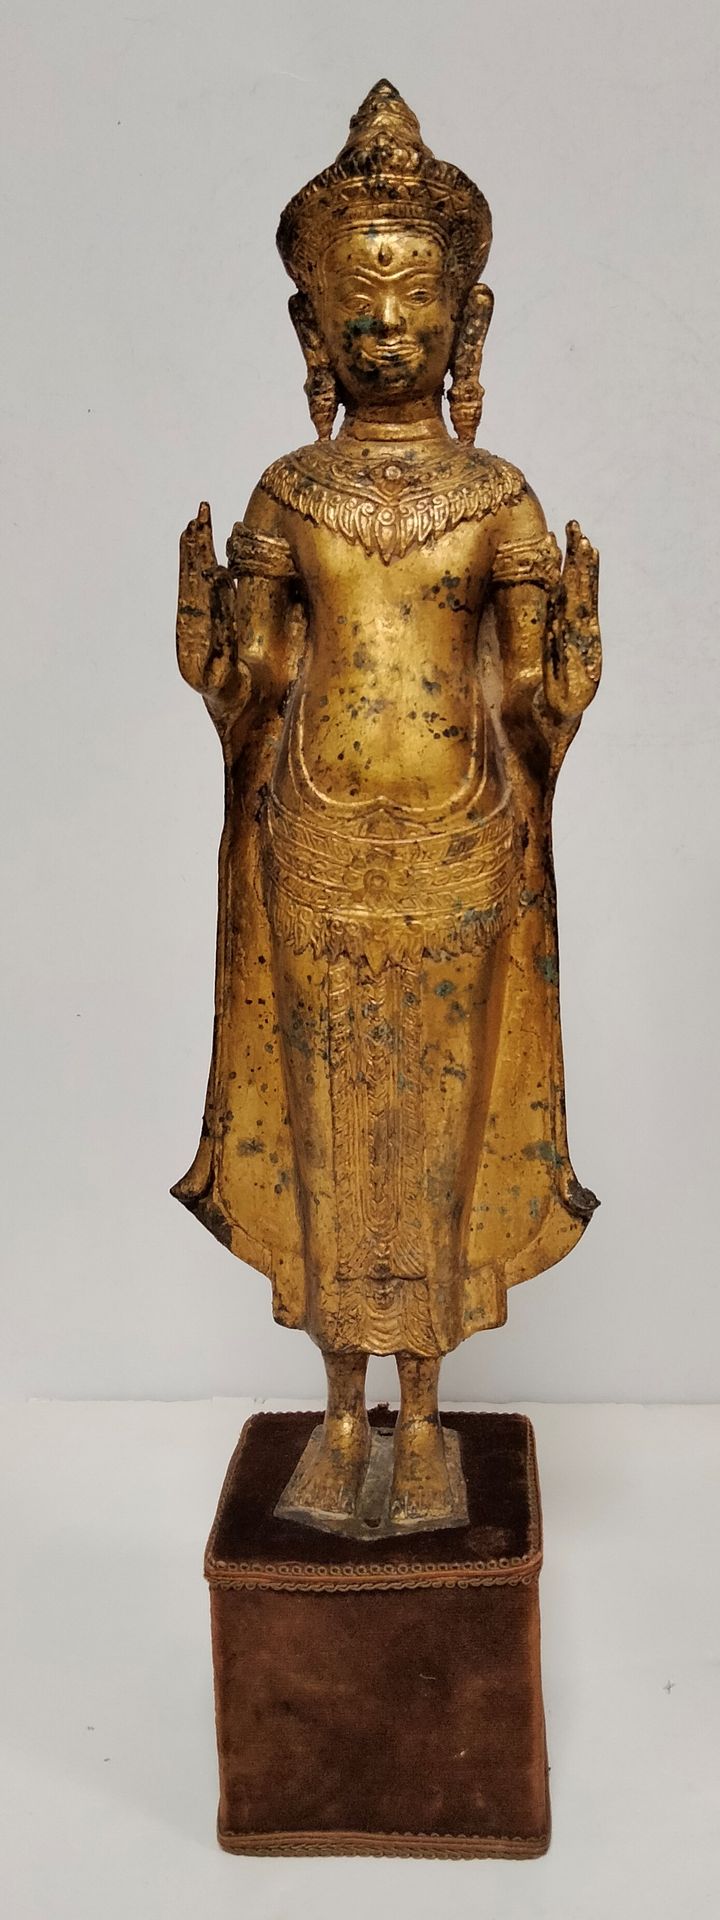 Null 佛像，泰国 站在
保护的abhaya mudra中。青铜镀金，底座覆盖棕色天鹅绒。
高度：46厘米